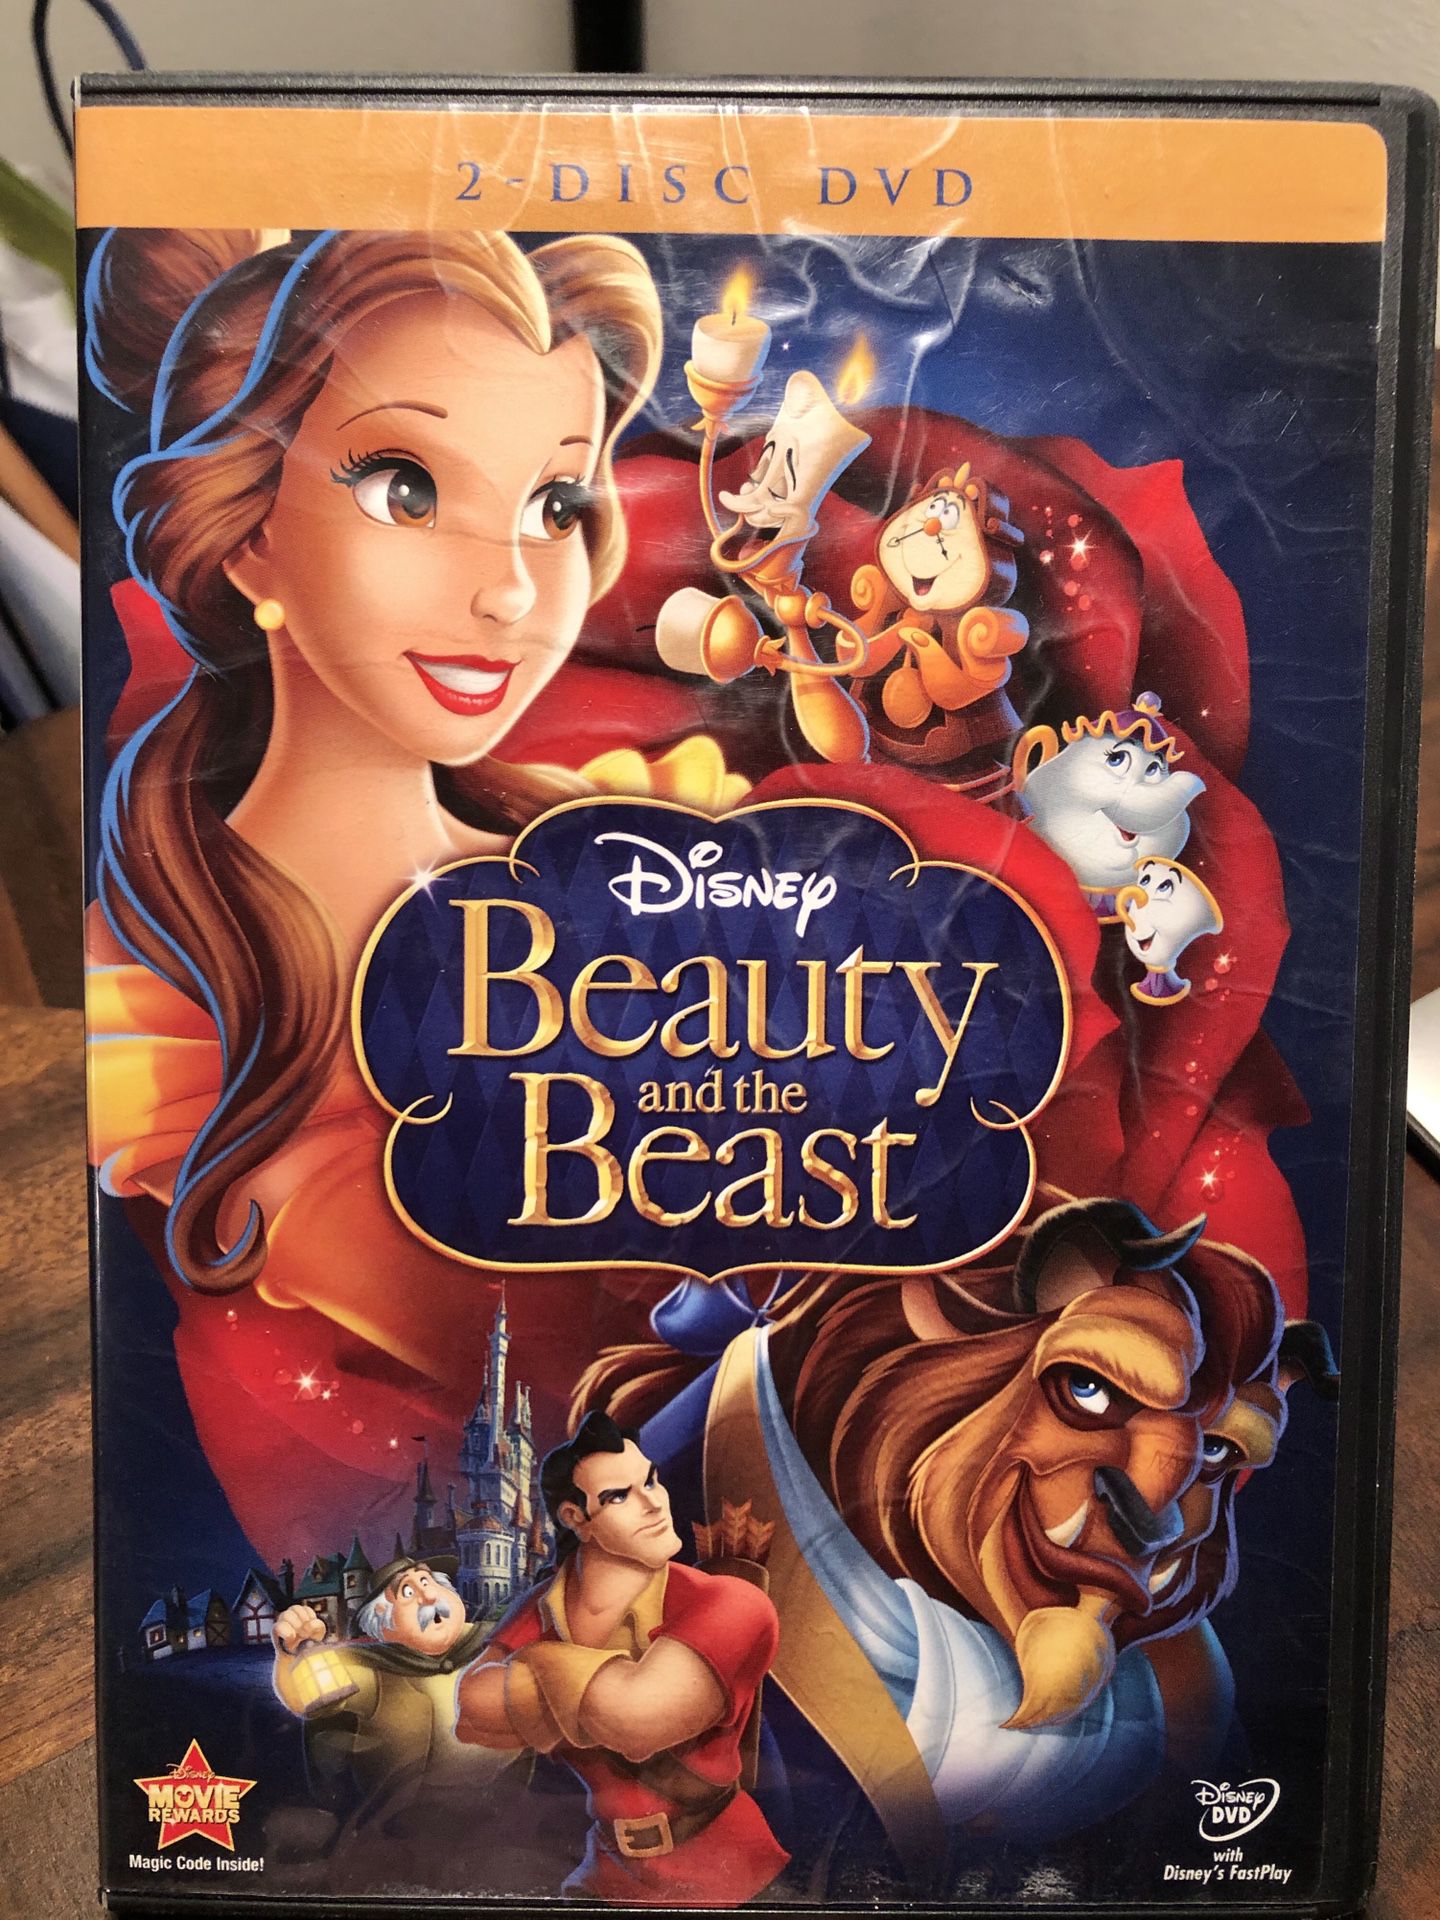 Disney Beauty and the Beast DVD set